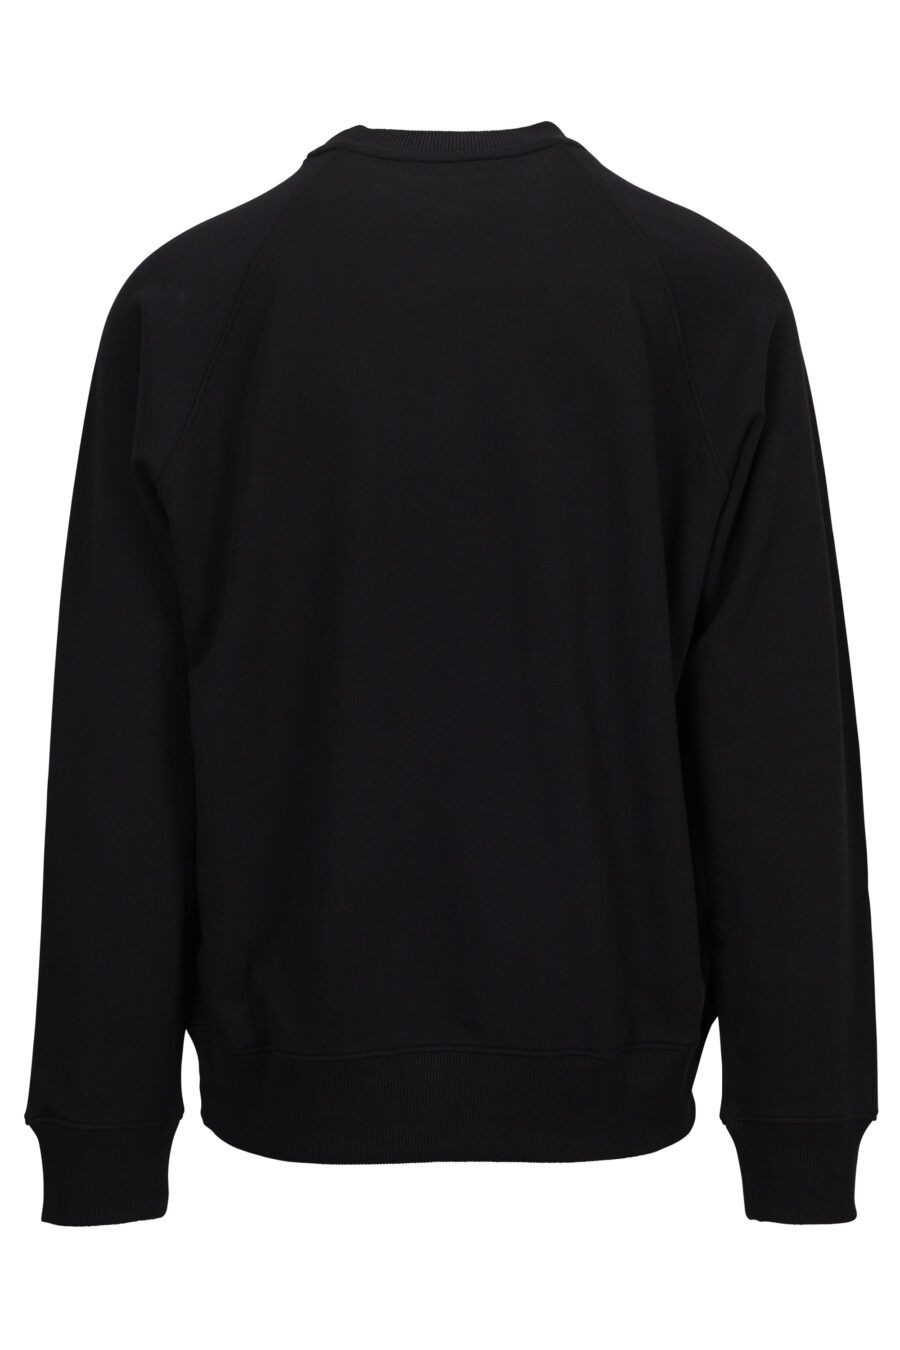 Black sweatshirt with white circular maxilogo - 8052019581089 1